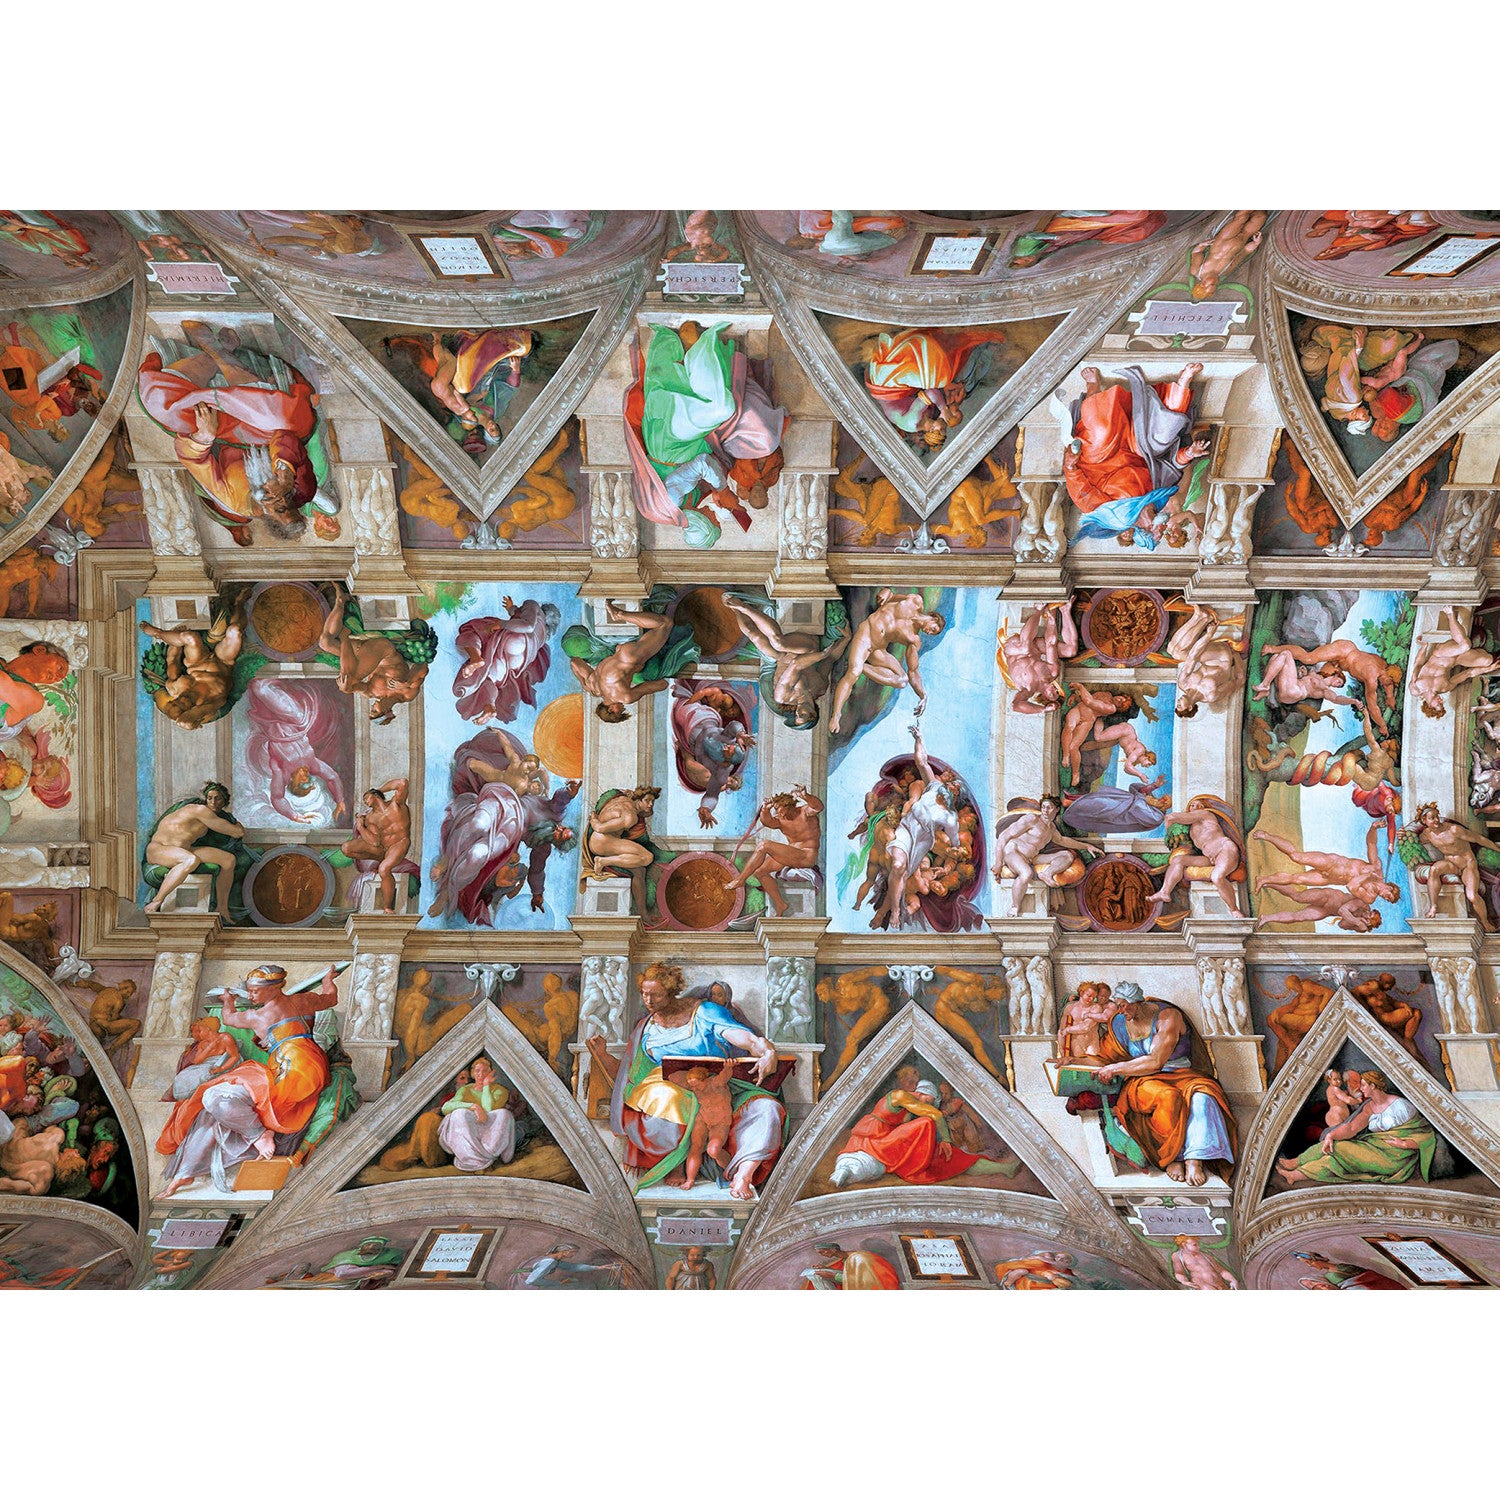 MasterPieces of Art - Sistine Chapel 1000 Piece Puzzle